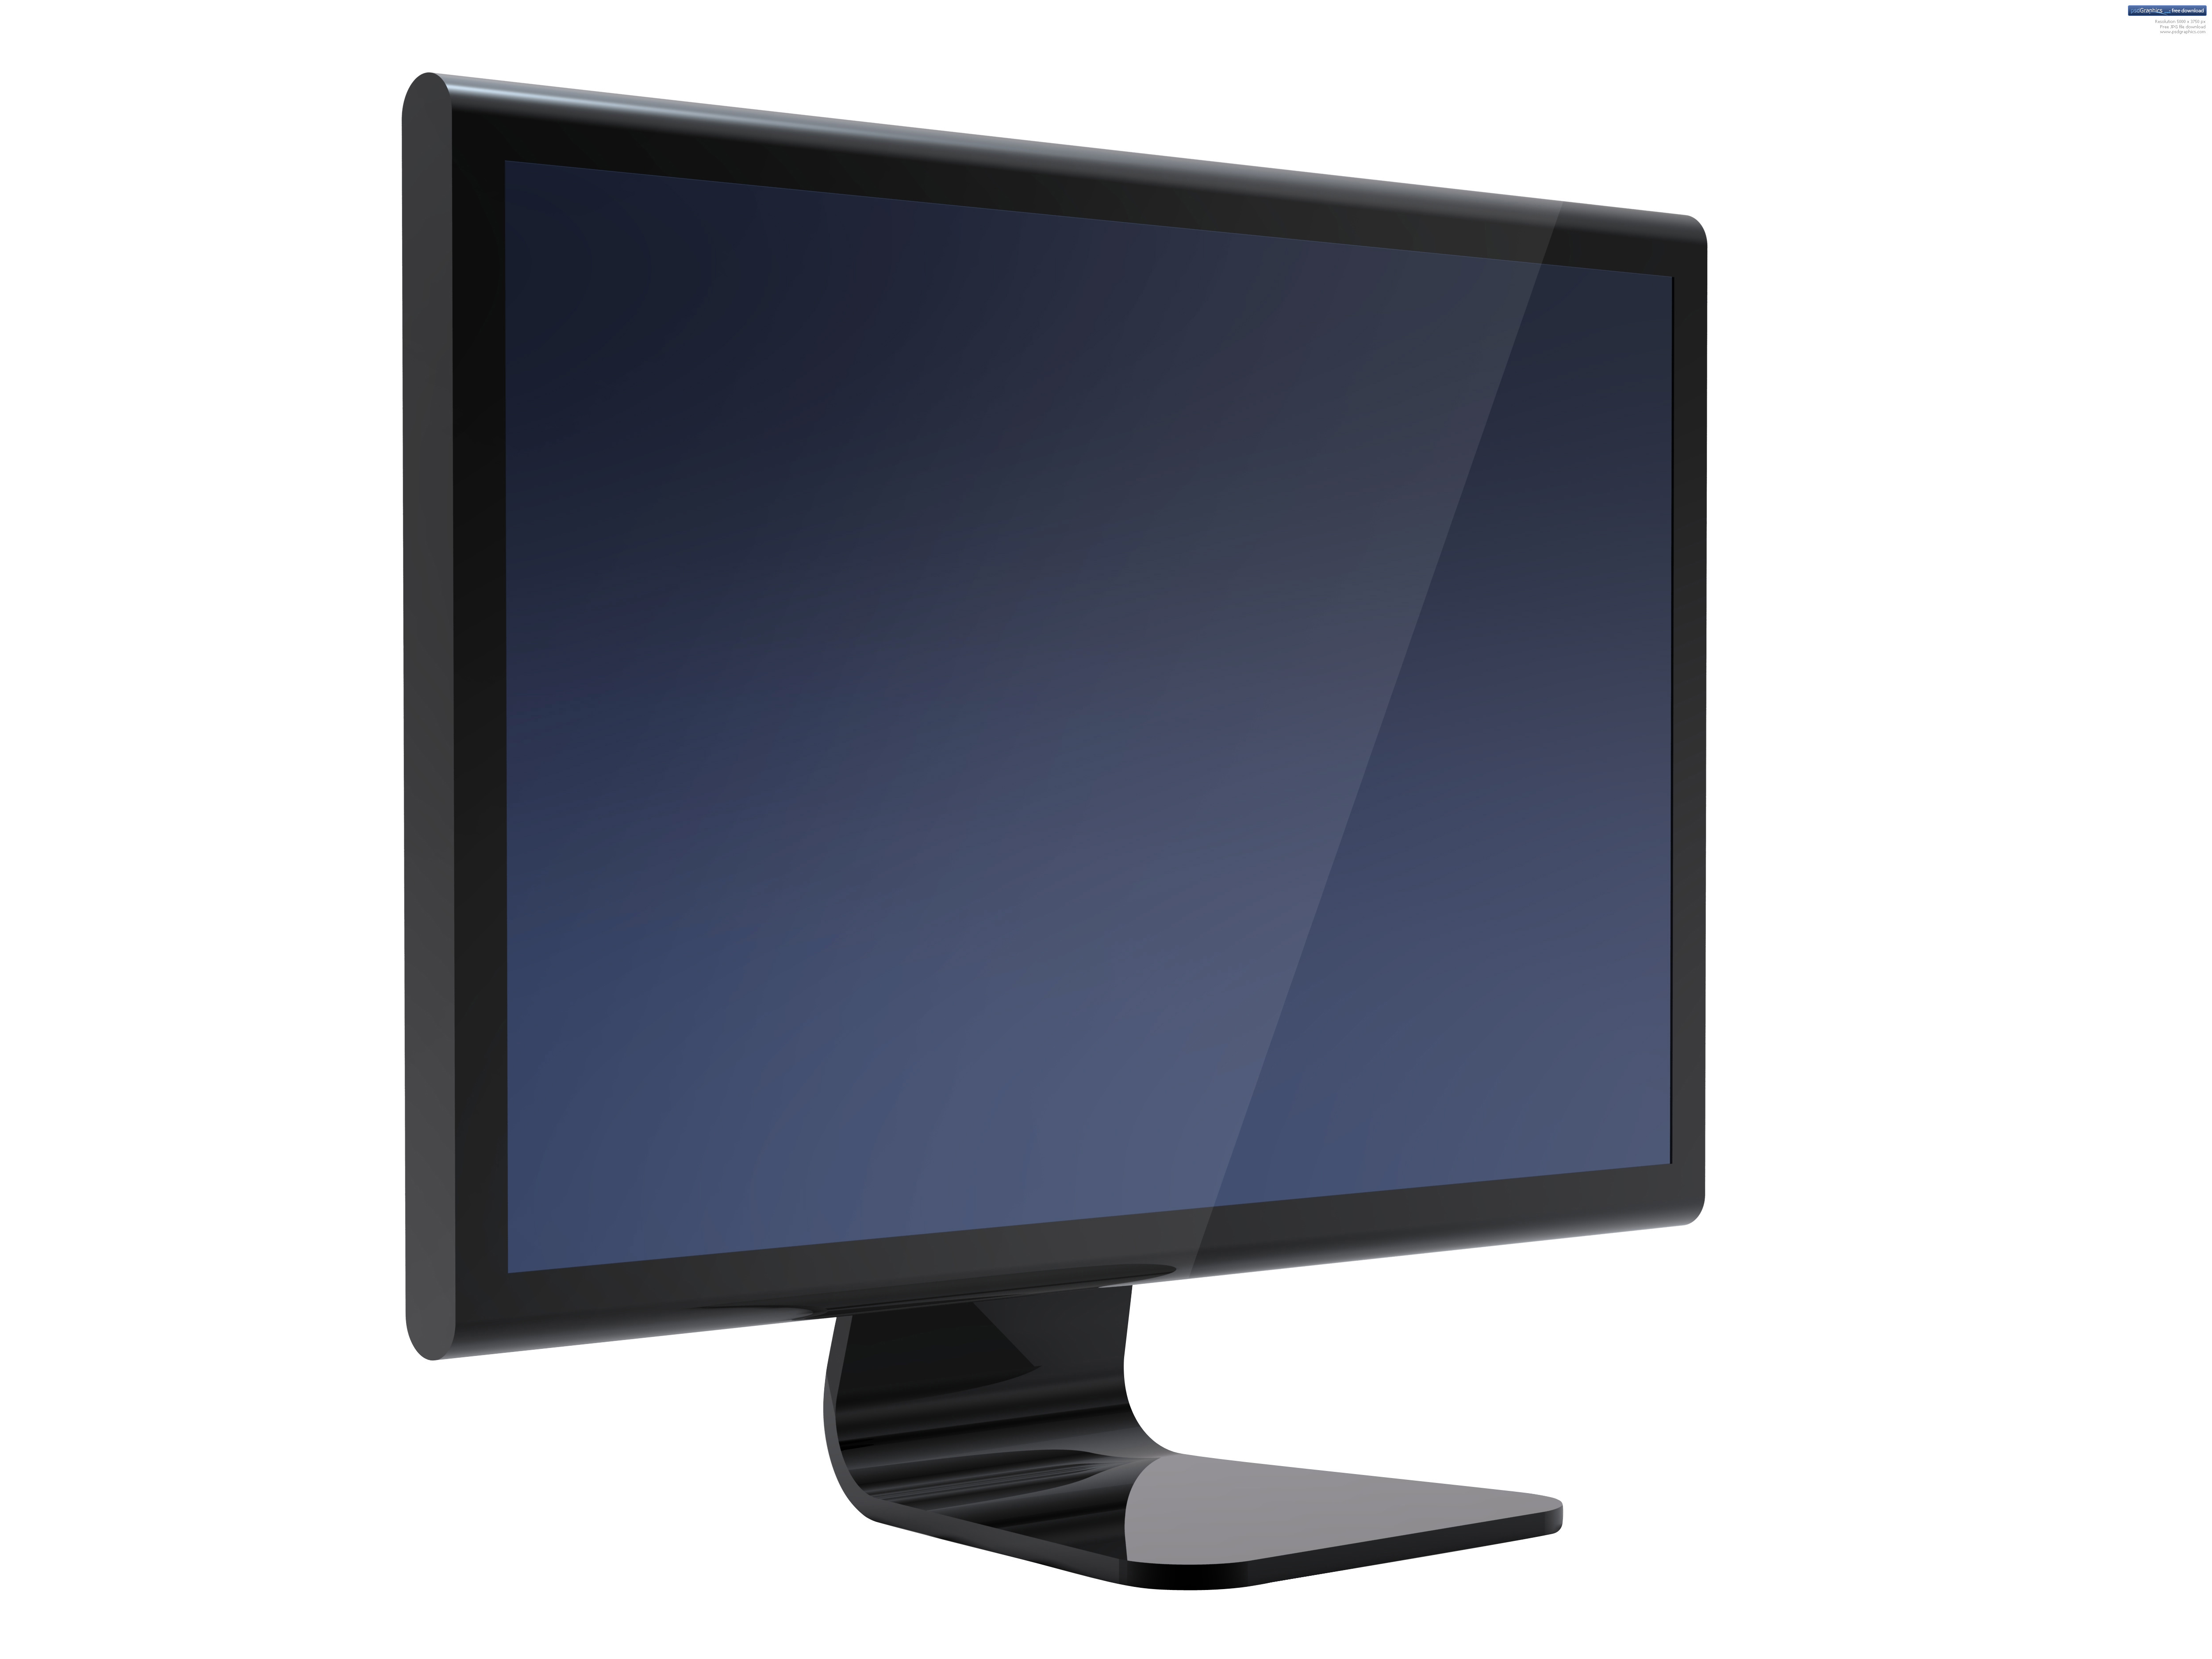 Black LCD display PSDGraphics